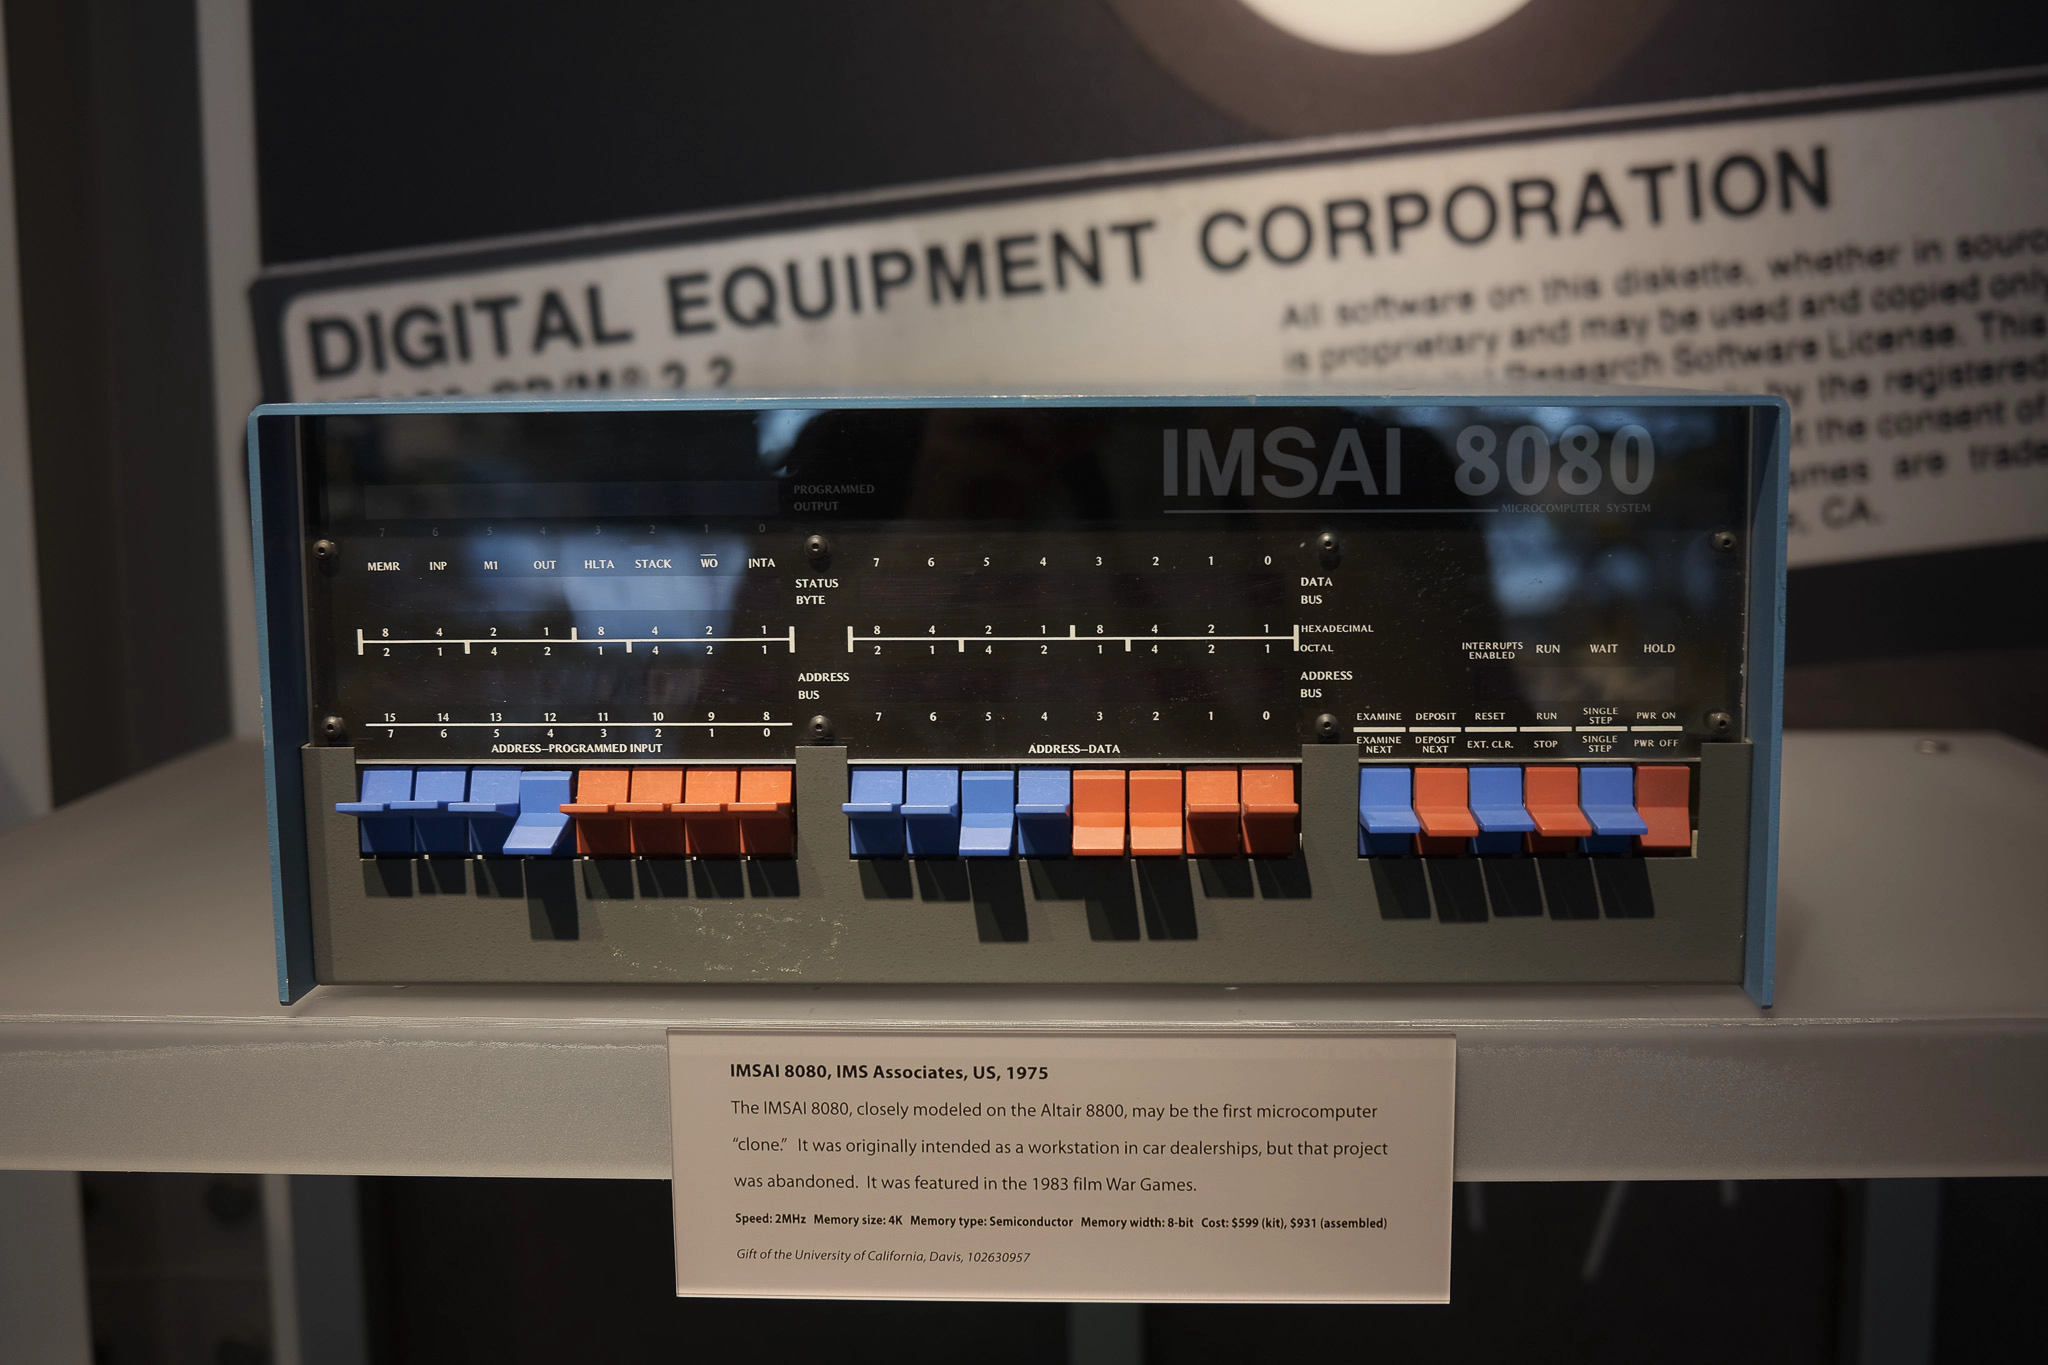 A photograph of the IMSAI 8080